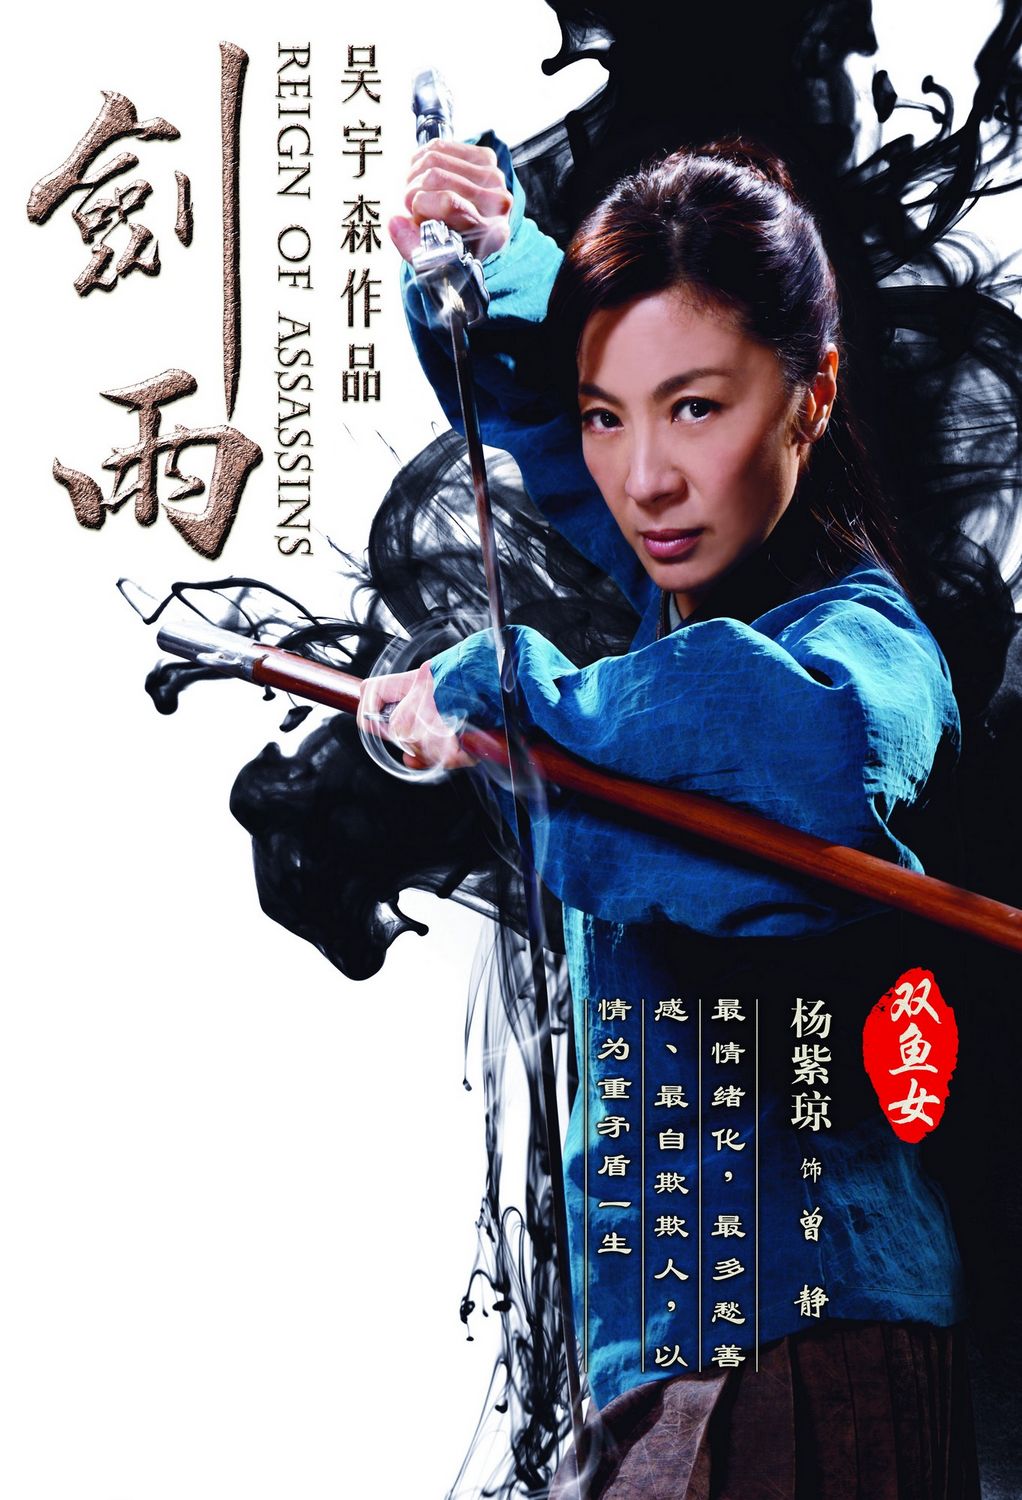 Extra Large Movie Poster Image for Jianyu (#4 of 11)